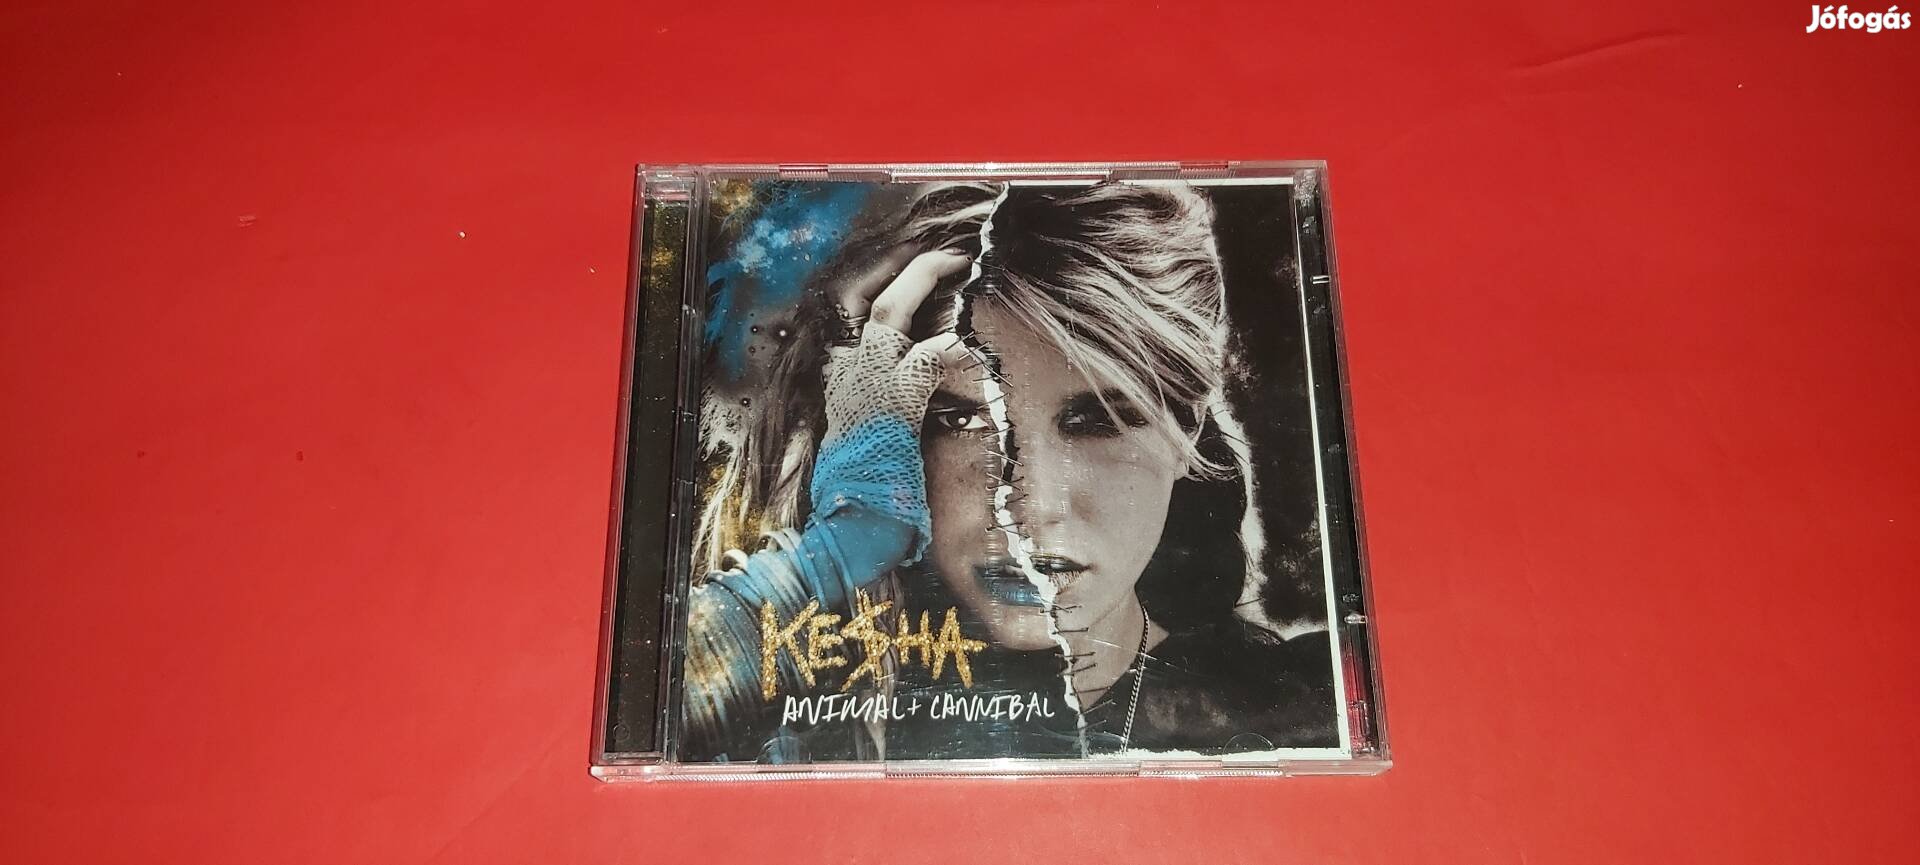 Kesha Animal+ Cannibal dupla Cd 2010